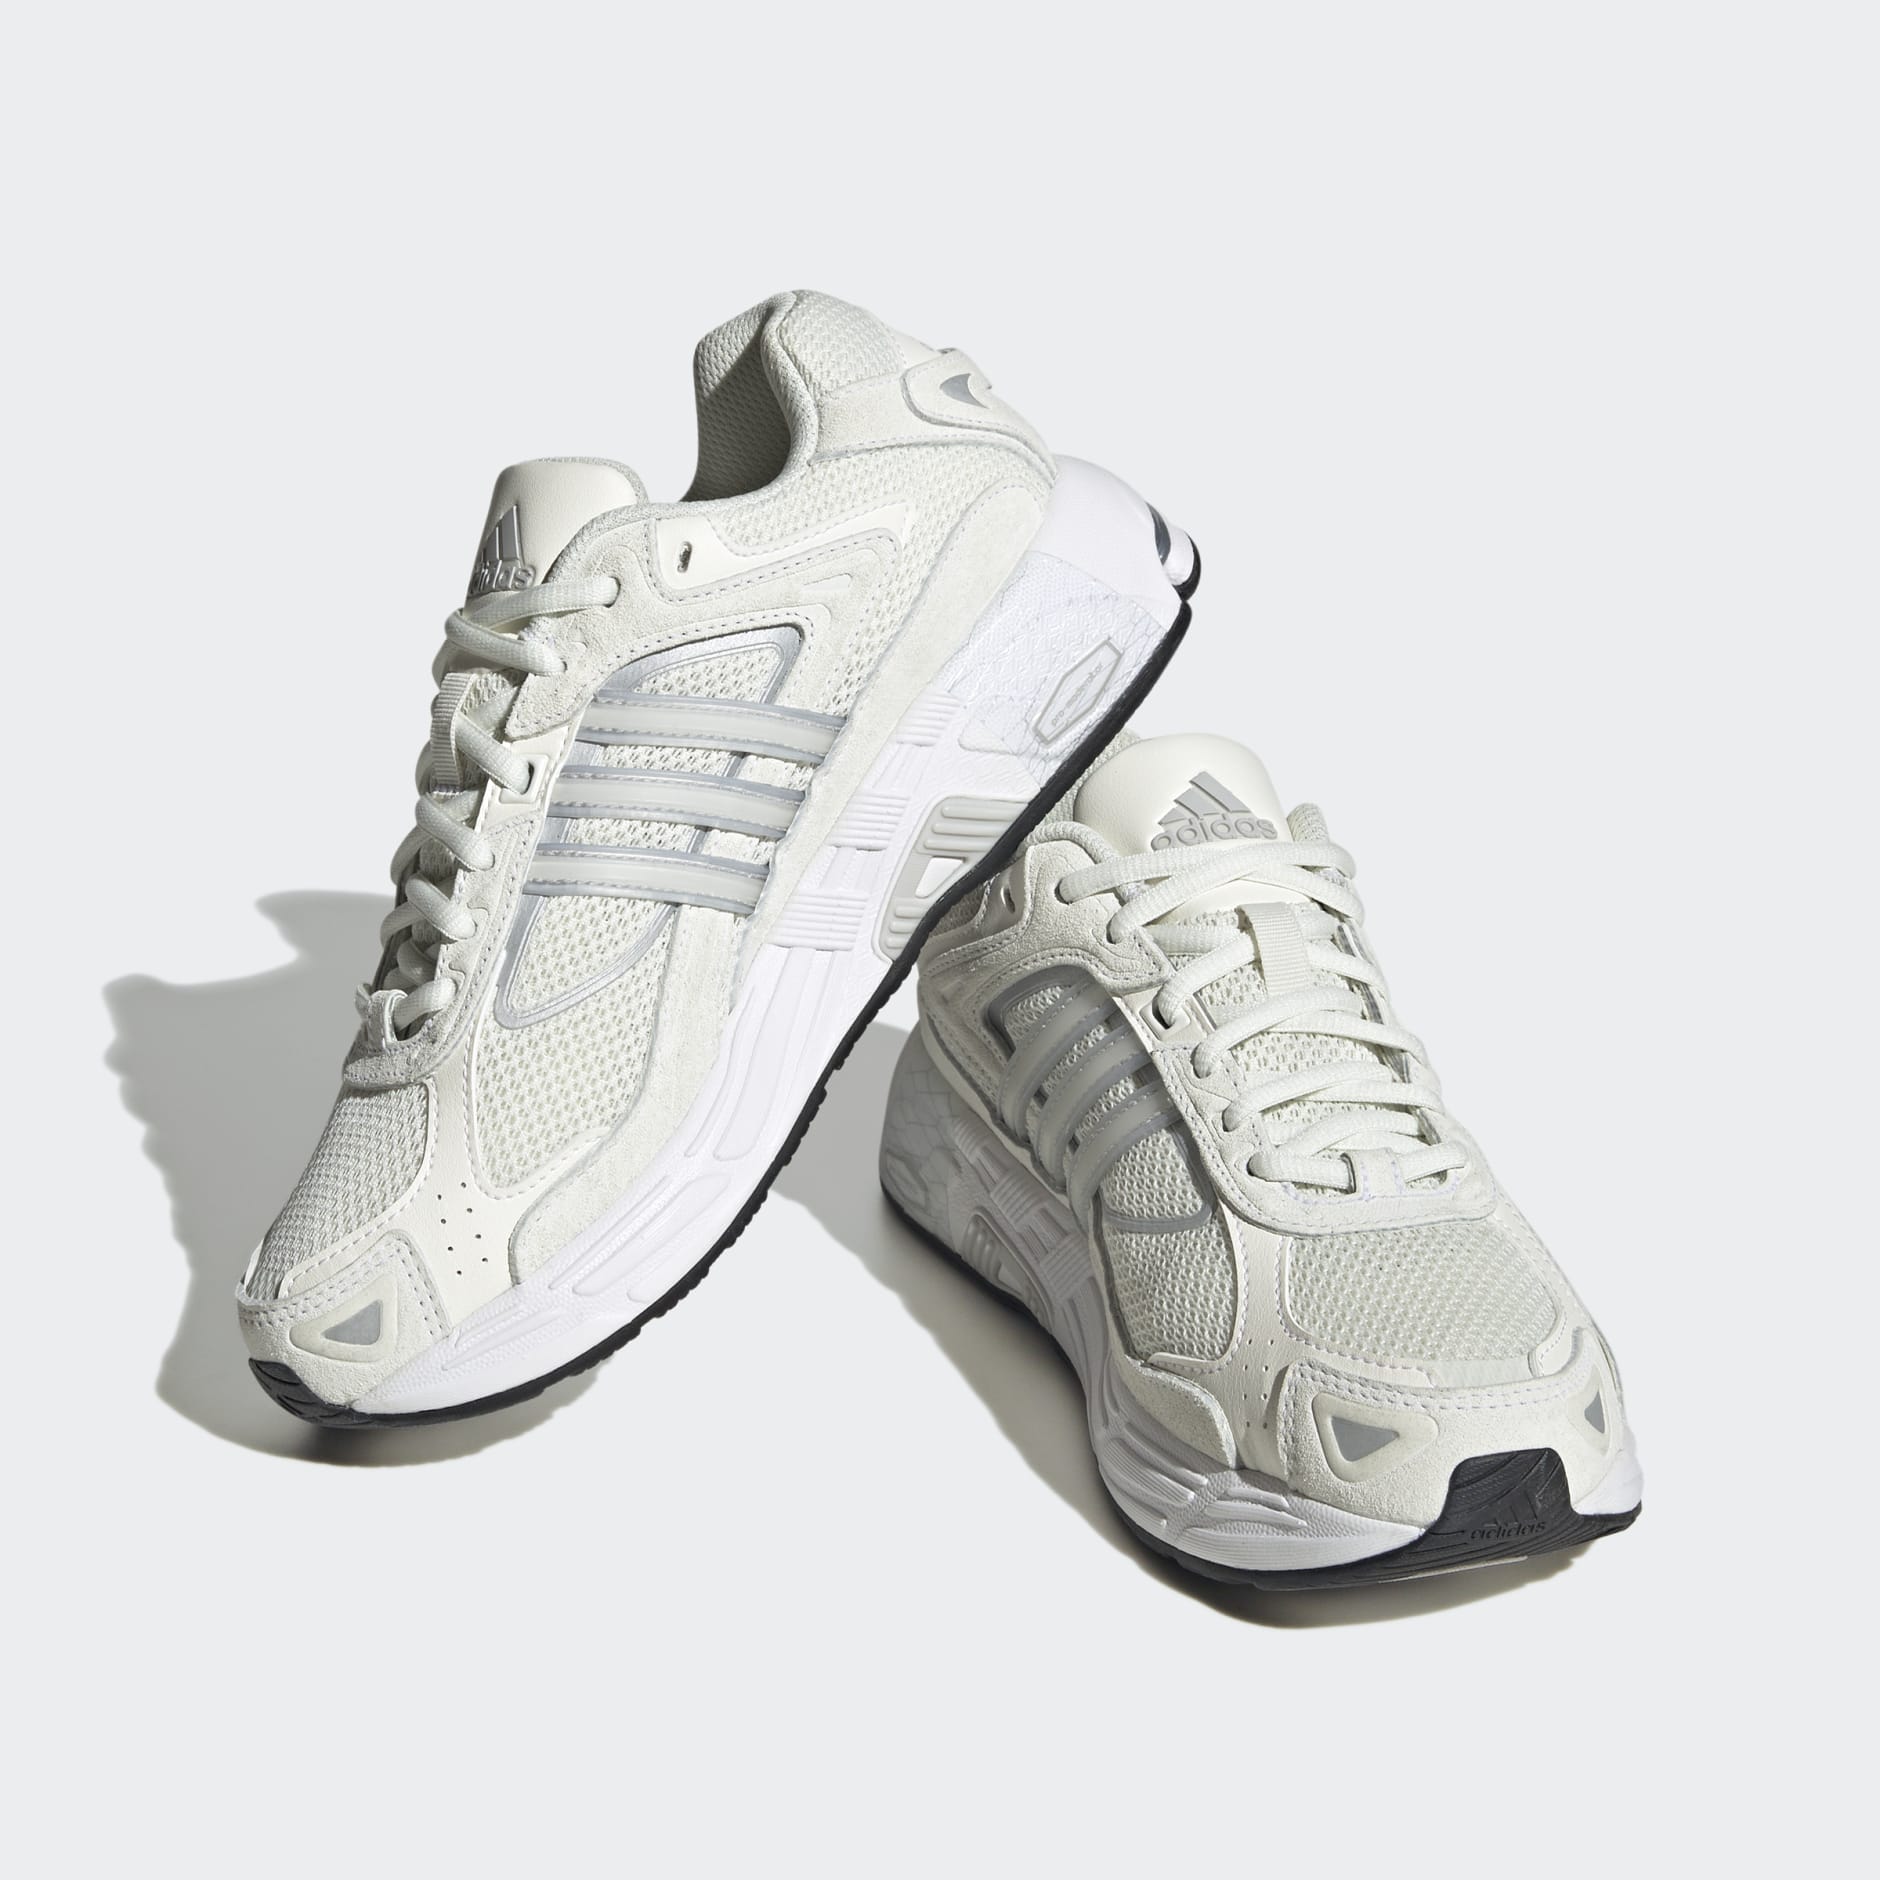 CL Response adidas Shoes KE - White | adidas